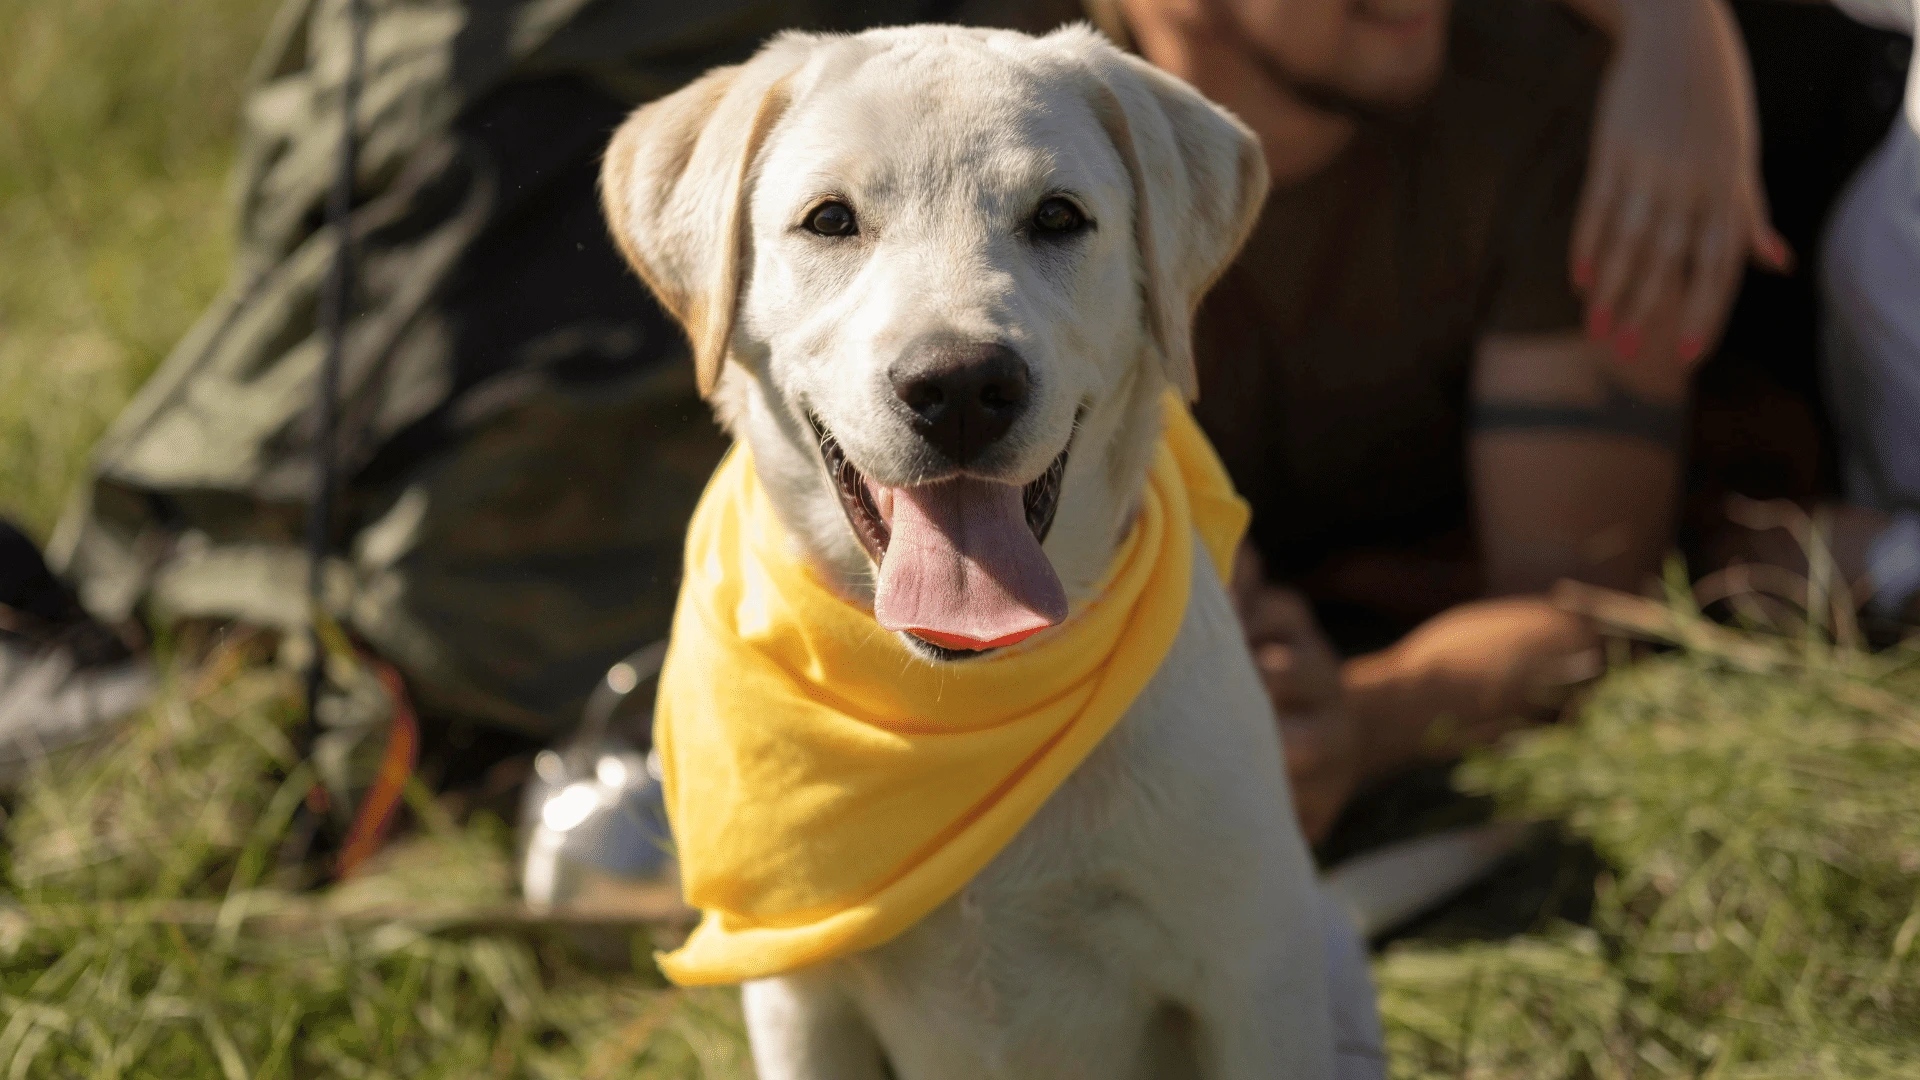 dog yellow ribbon żółta wstążka u psa